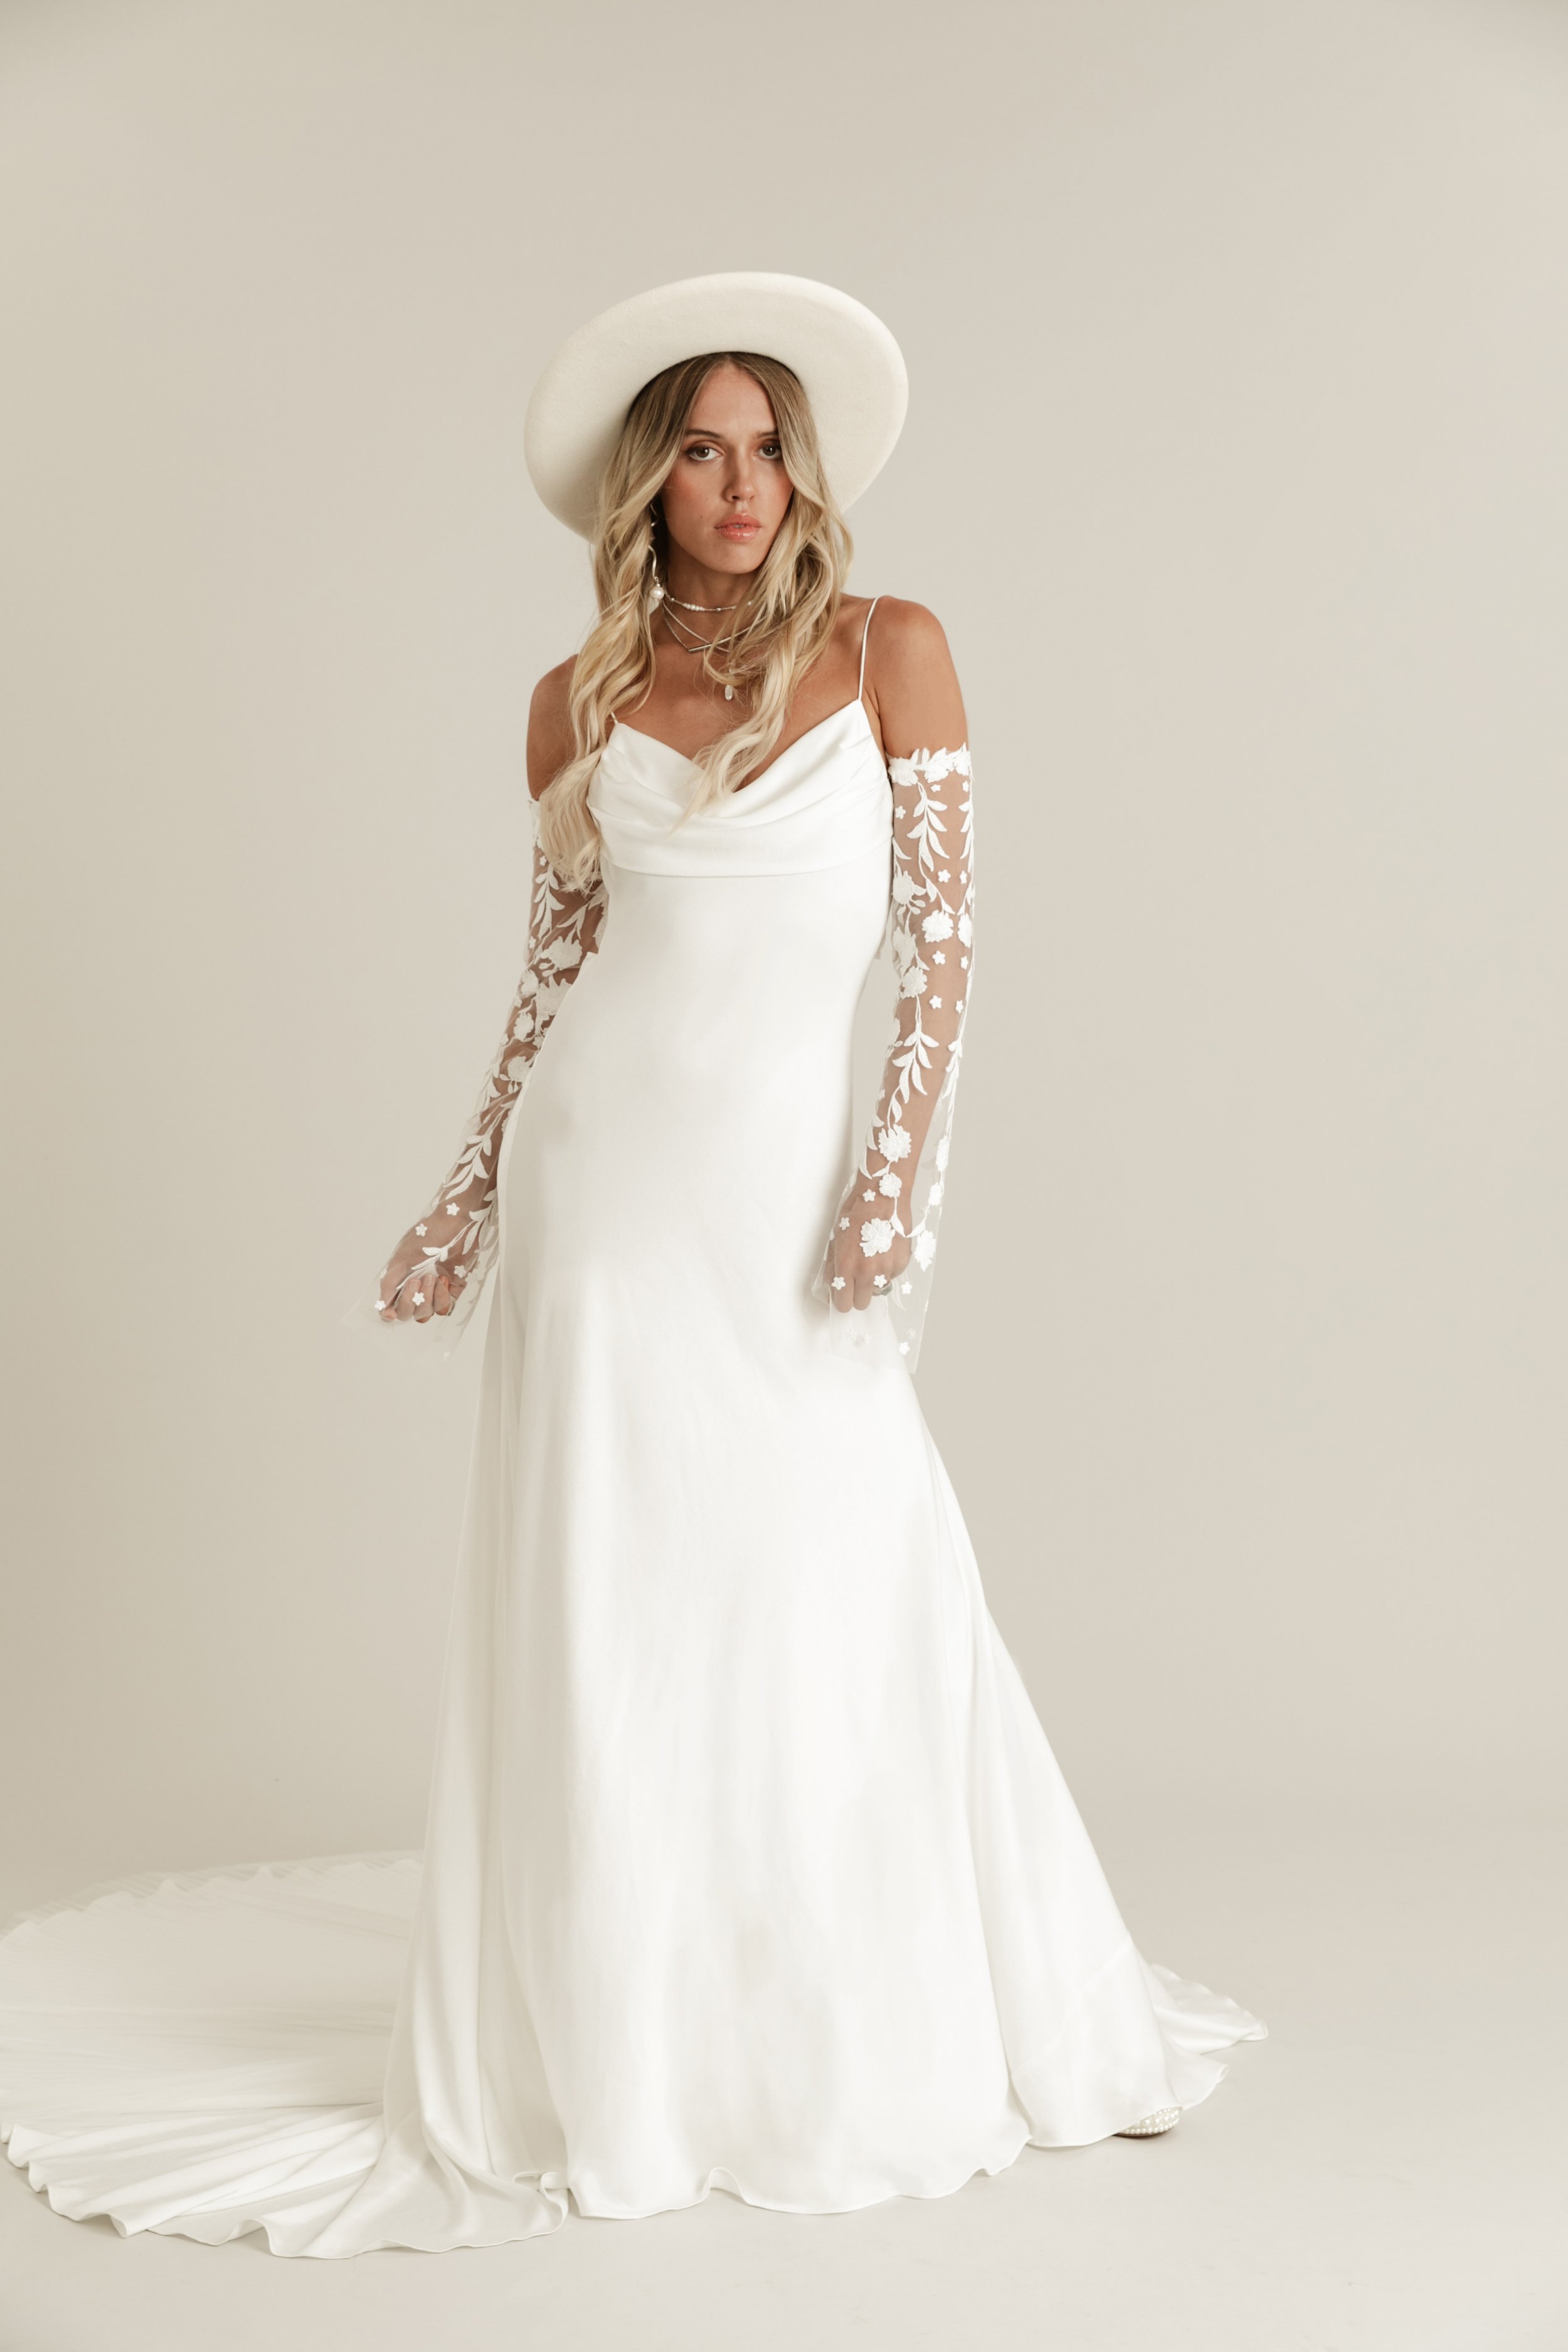 blanc-de-blanc-birdal-boutique-pittsburgh-dress-wedding-gown-rue-de-seine-wells-sleeves.jpg